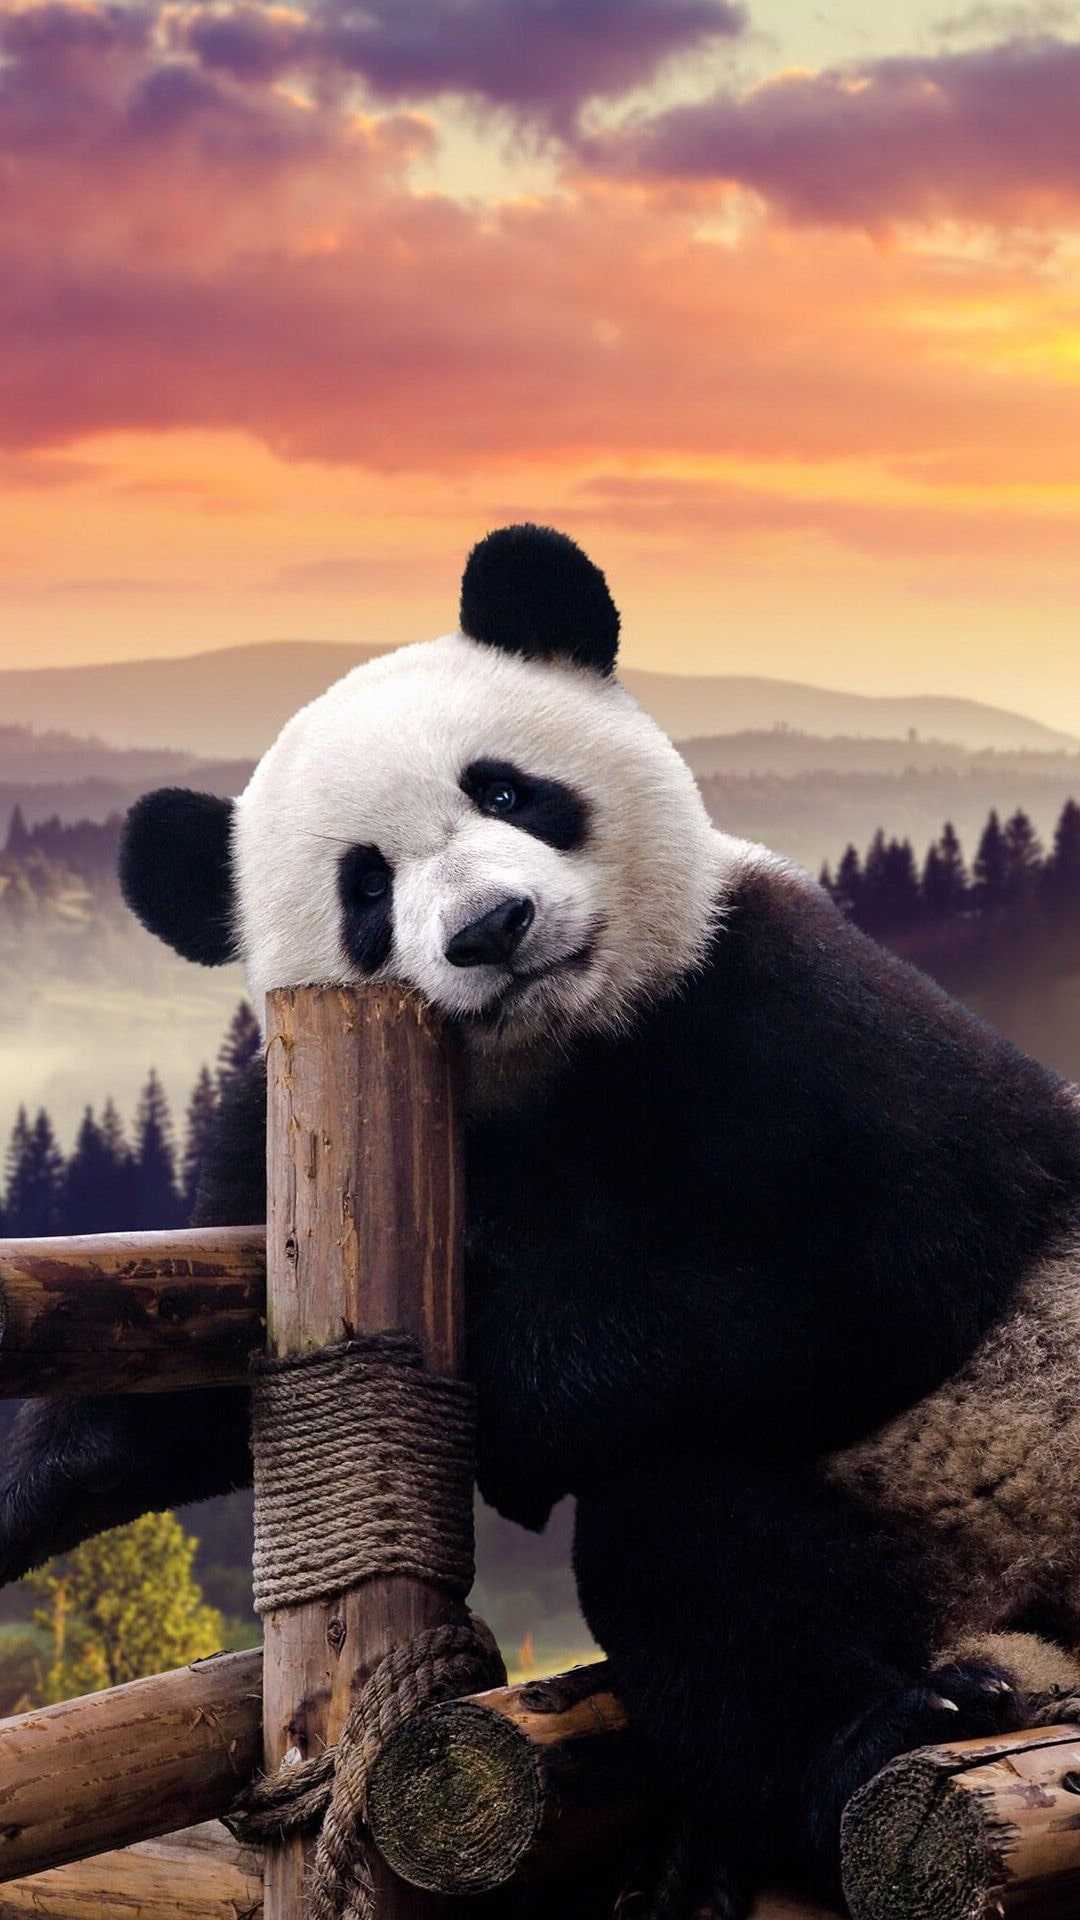 4K Panda Wallpaper - iXpap